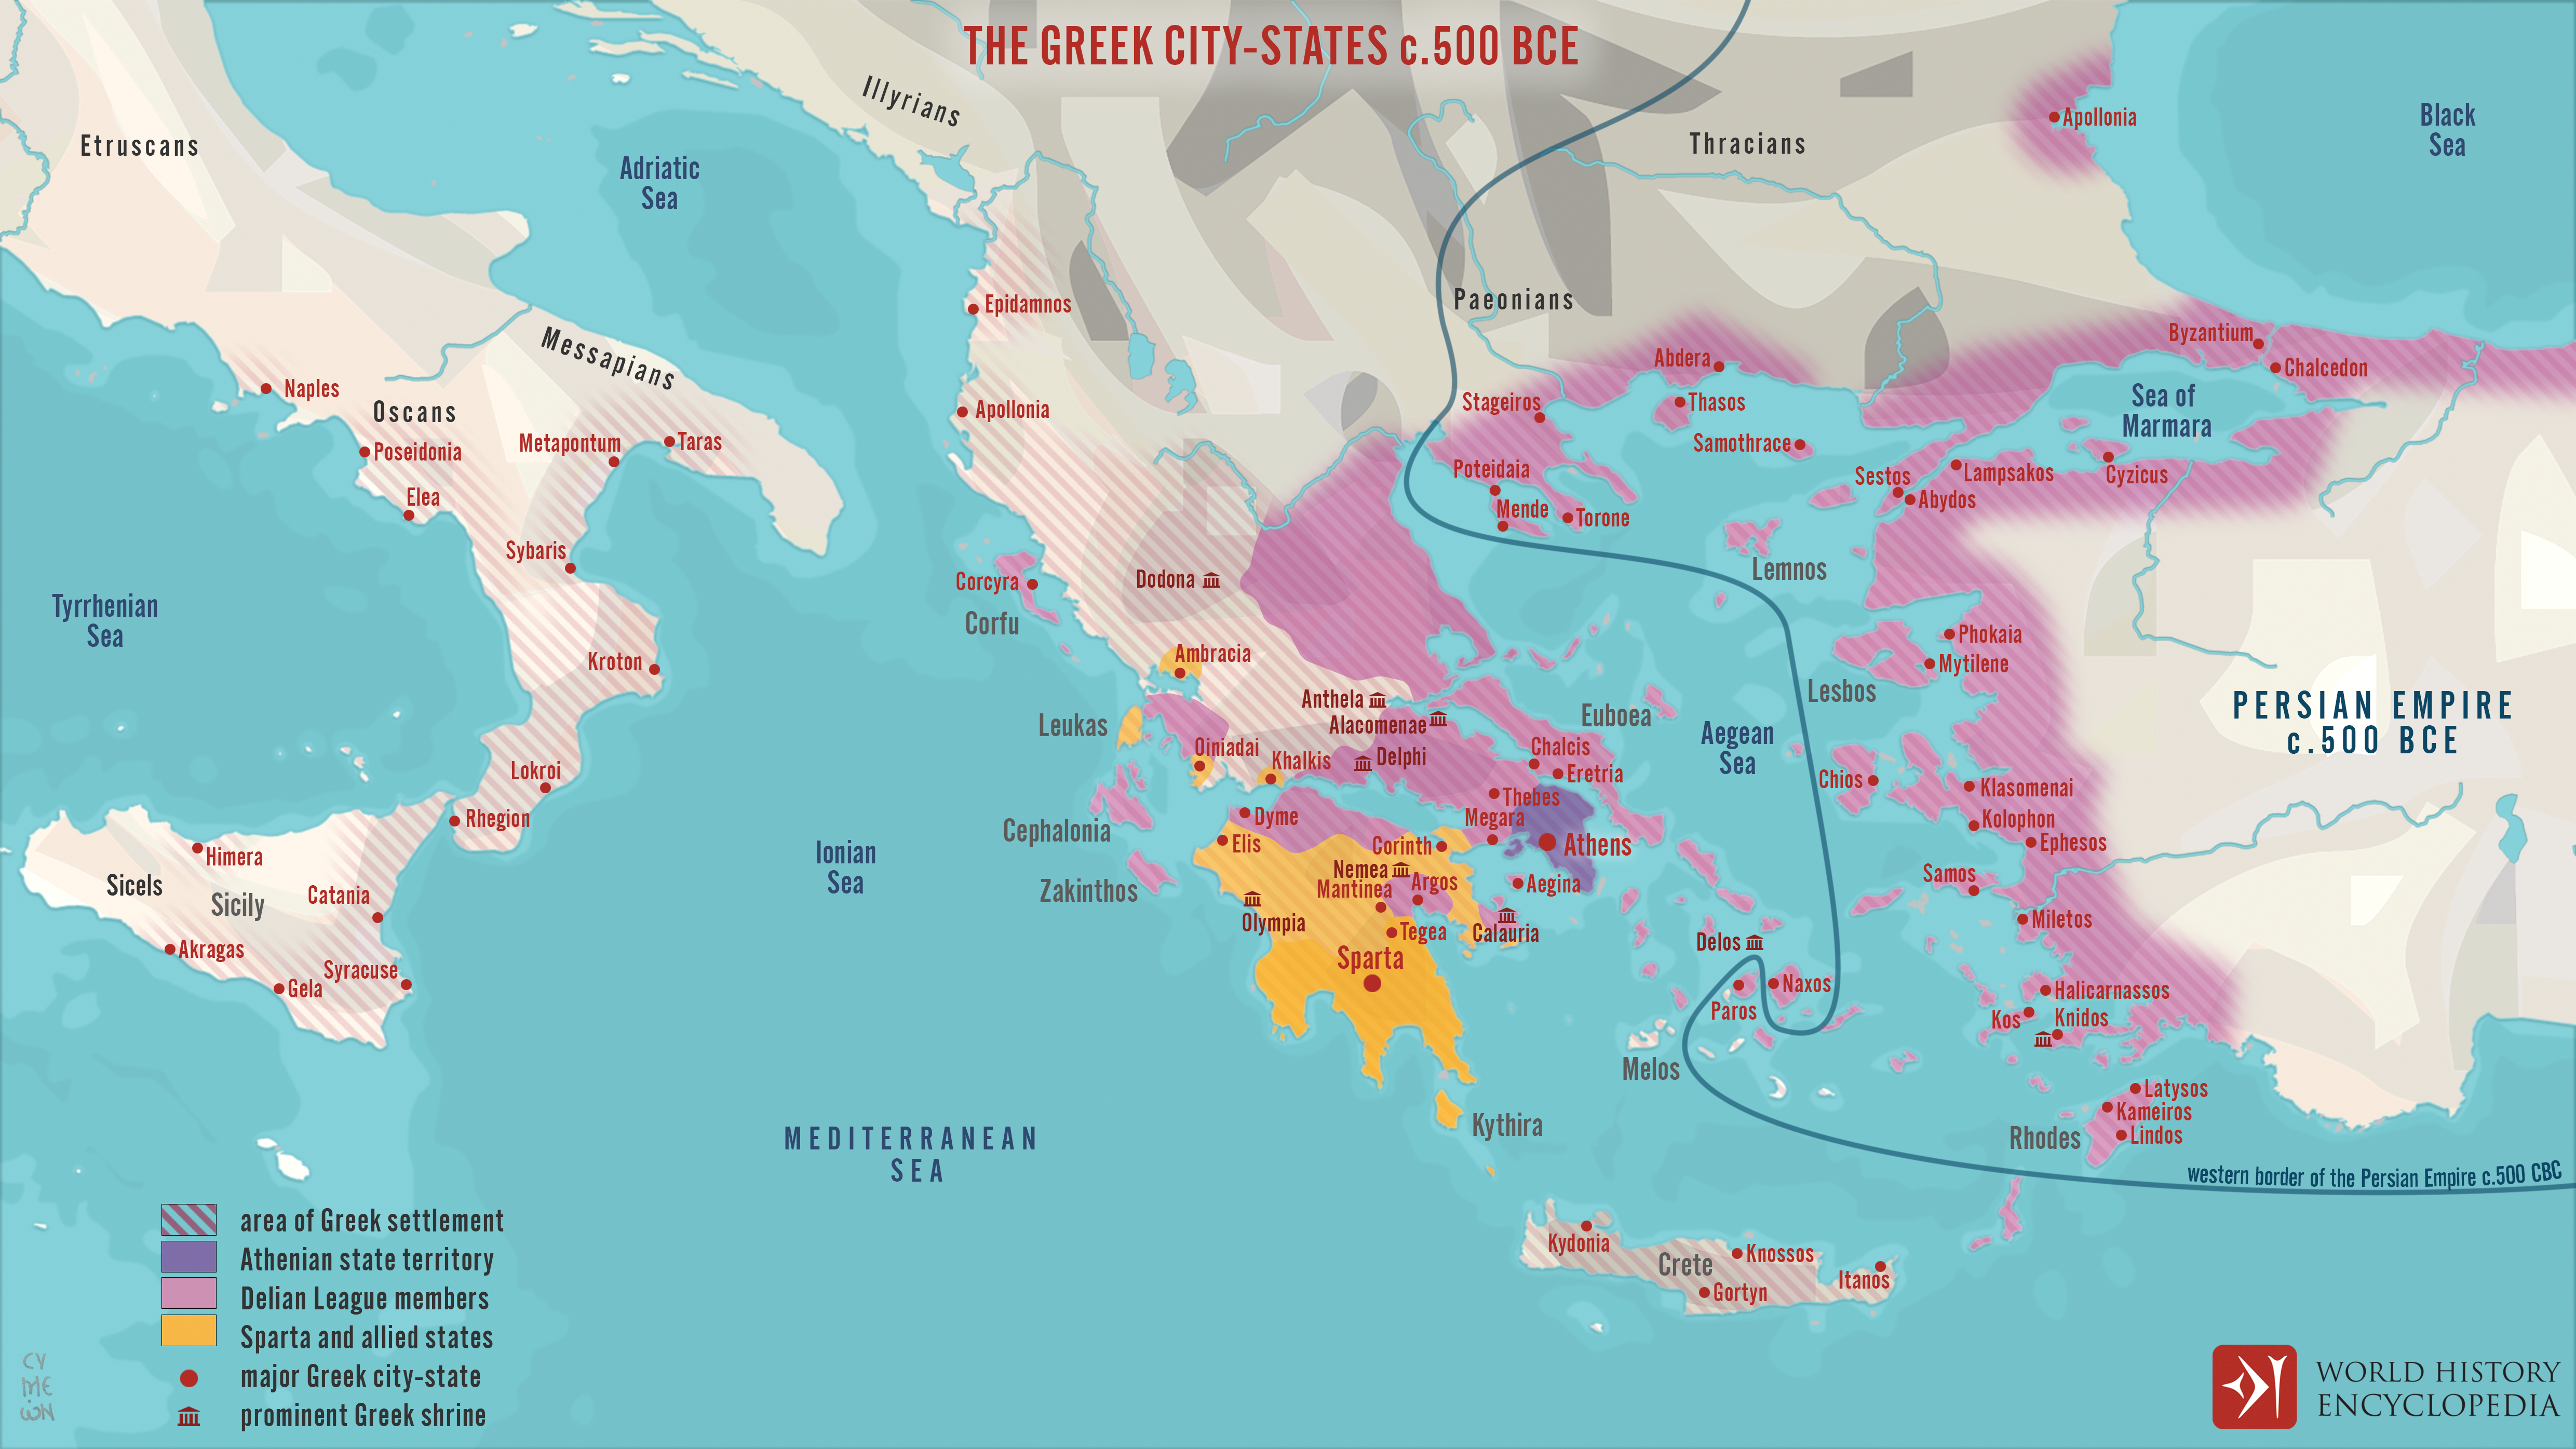 greek city states first emerged